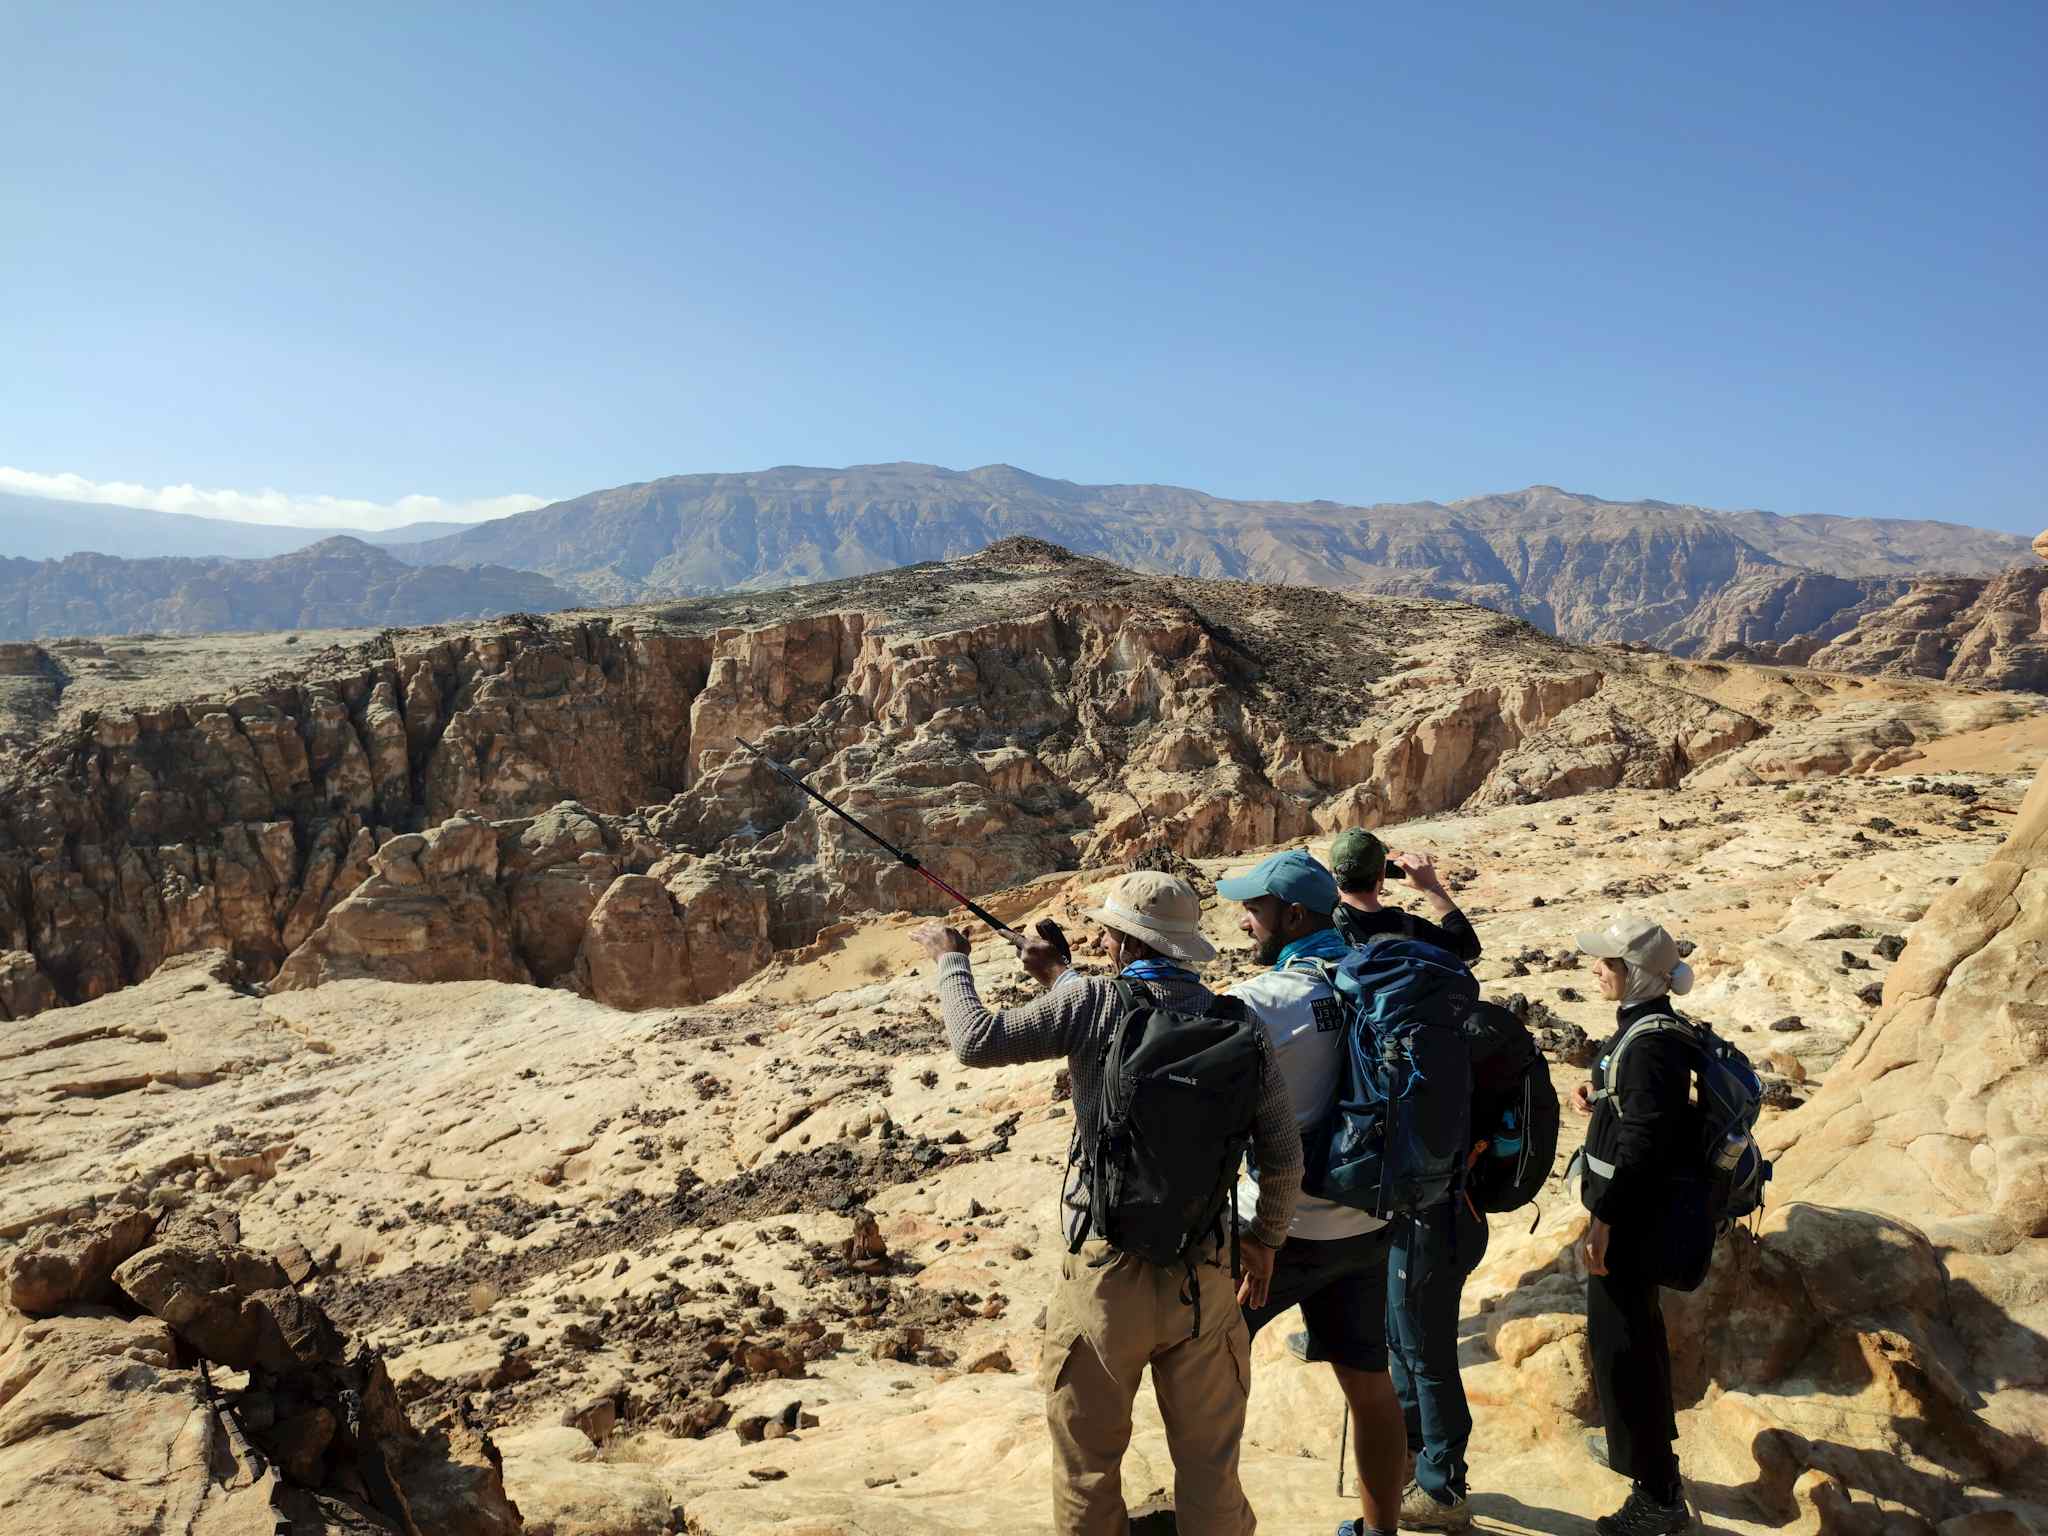 Trekkers on the The Jordan Trail
Host image - Experience Jordan